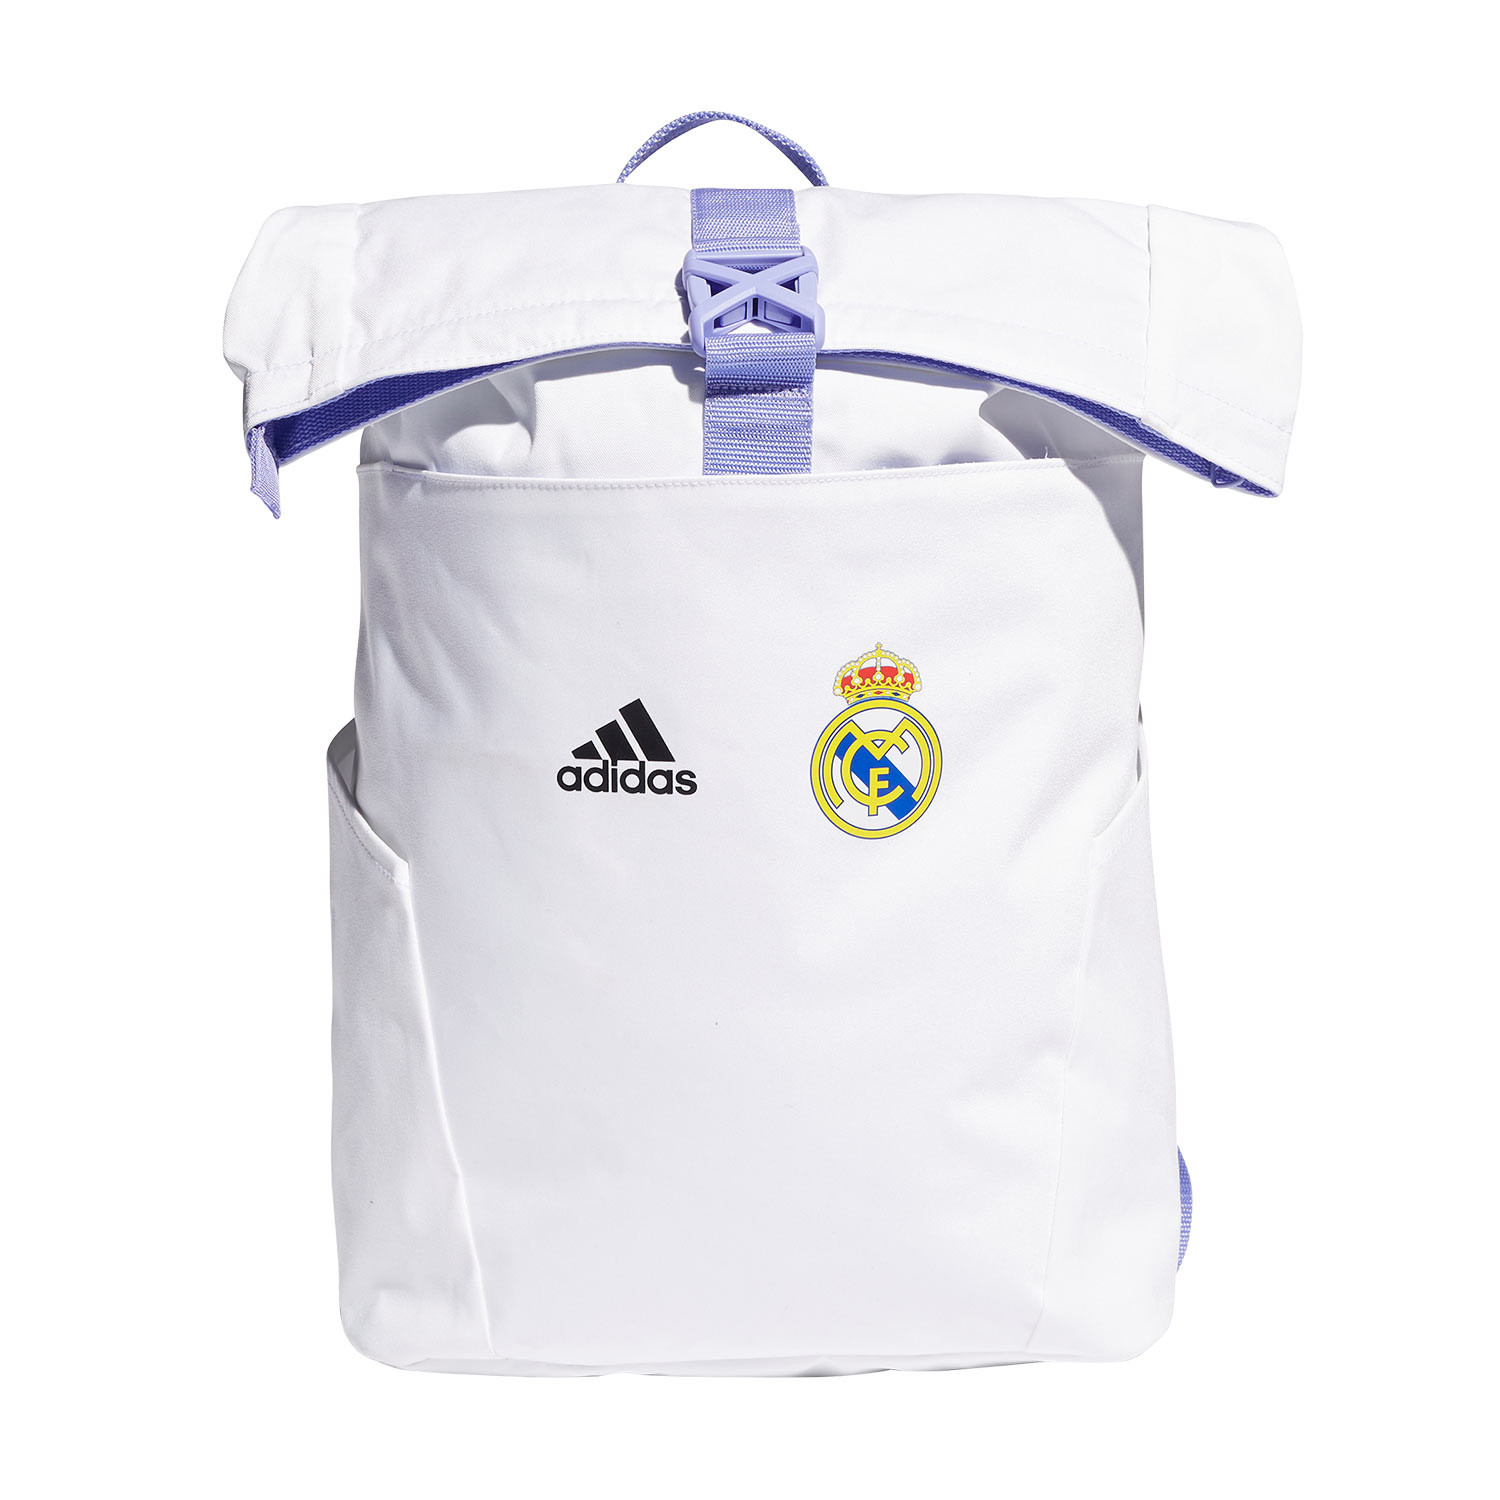 Mochila RM CF | Mochila Real Madrid | Mochila del Real Madrid 2015/16 |  mochila verde fosforito y gris real madrid